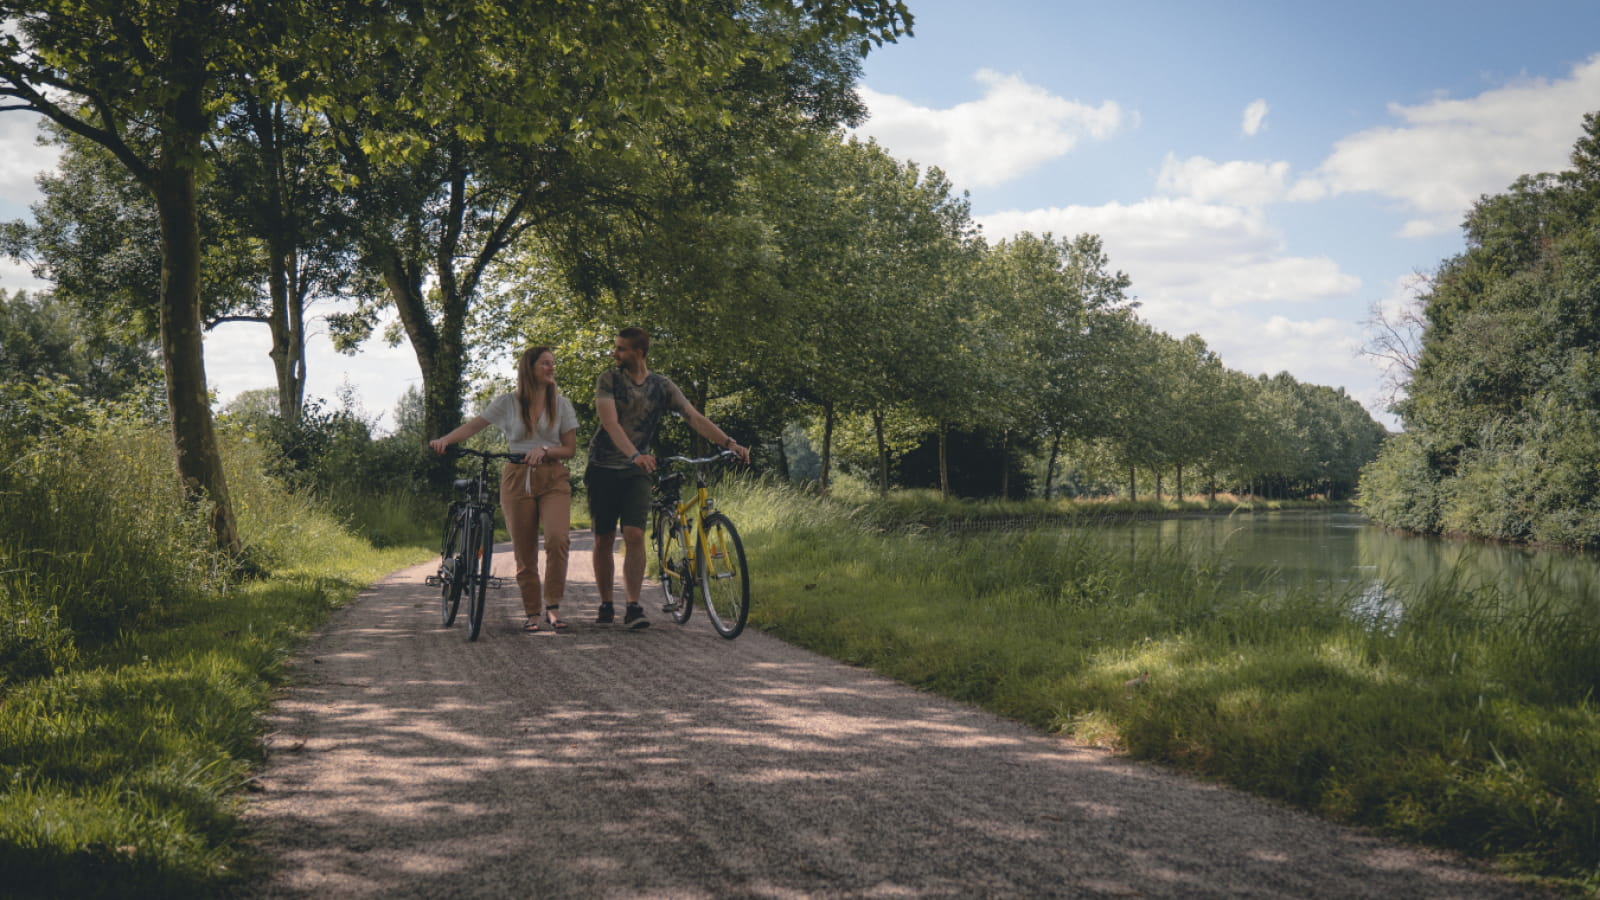 Canal de Bourgogne à vélo